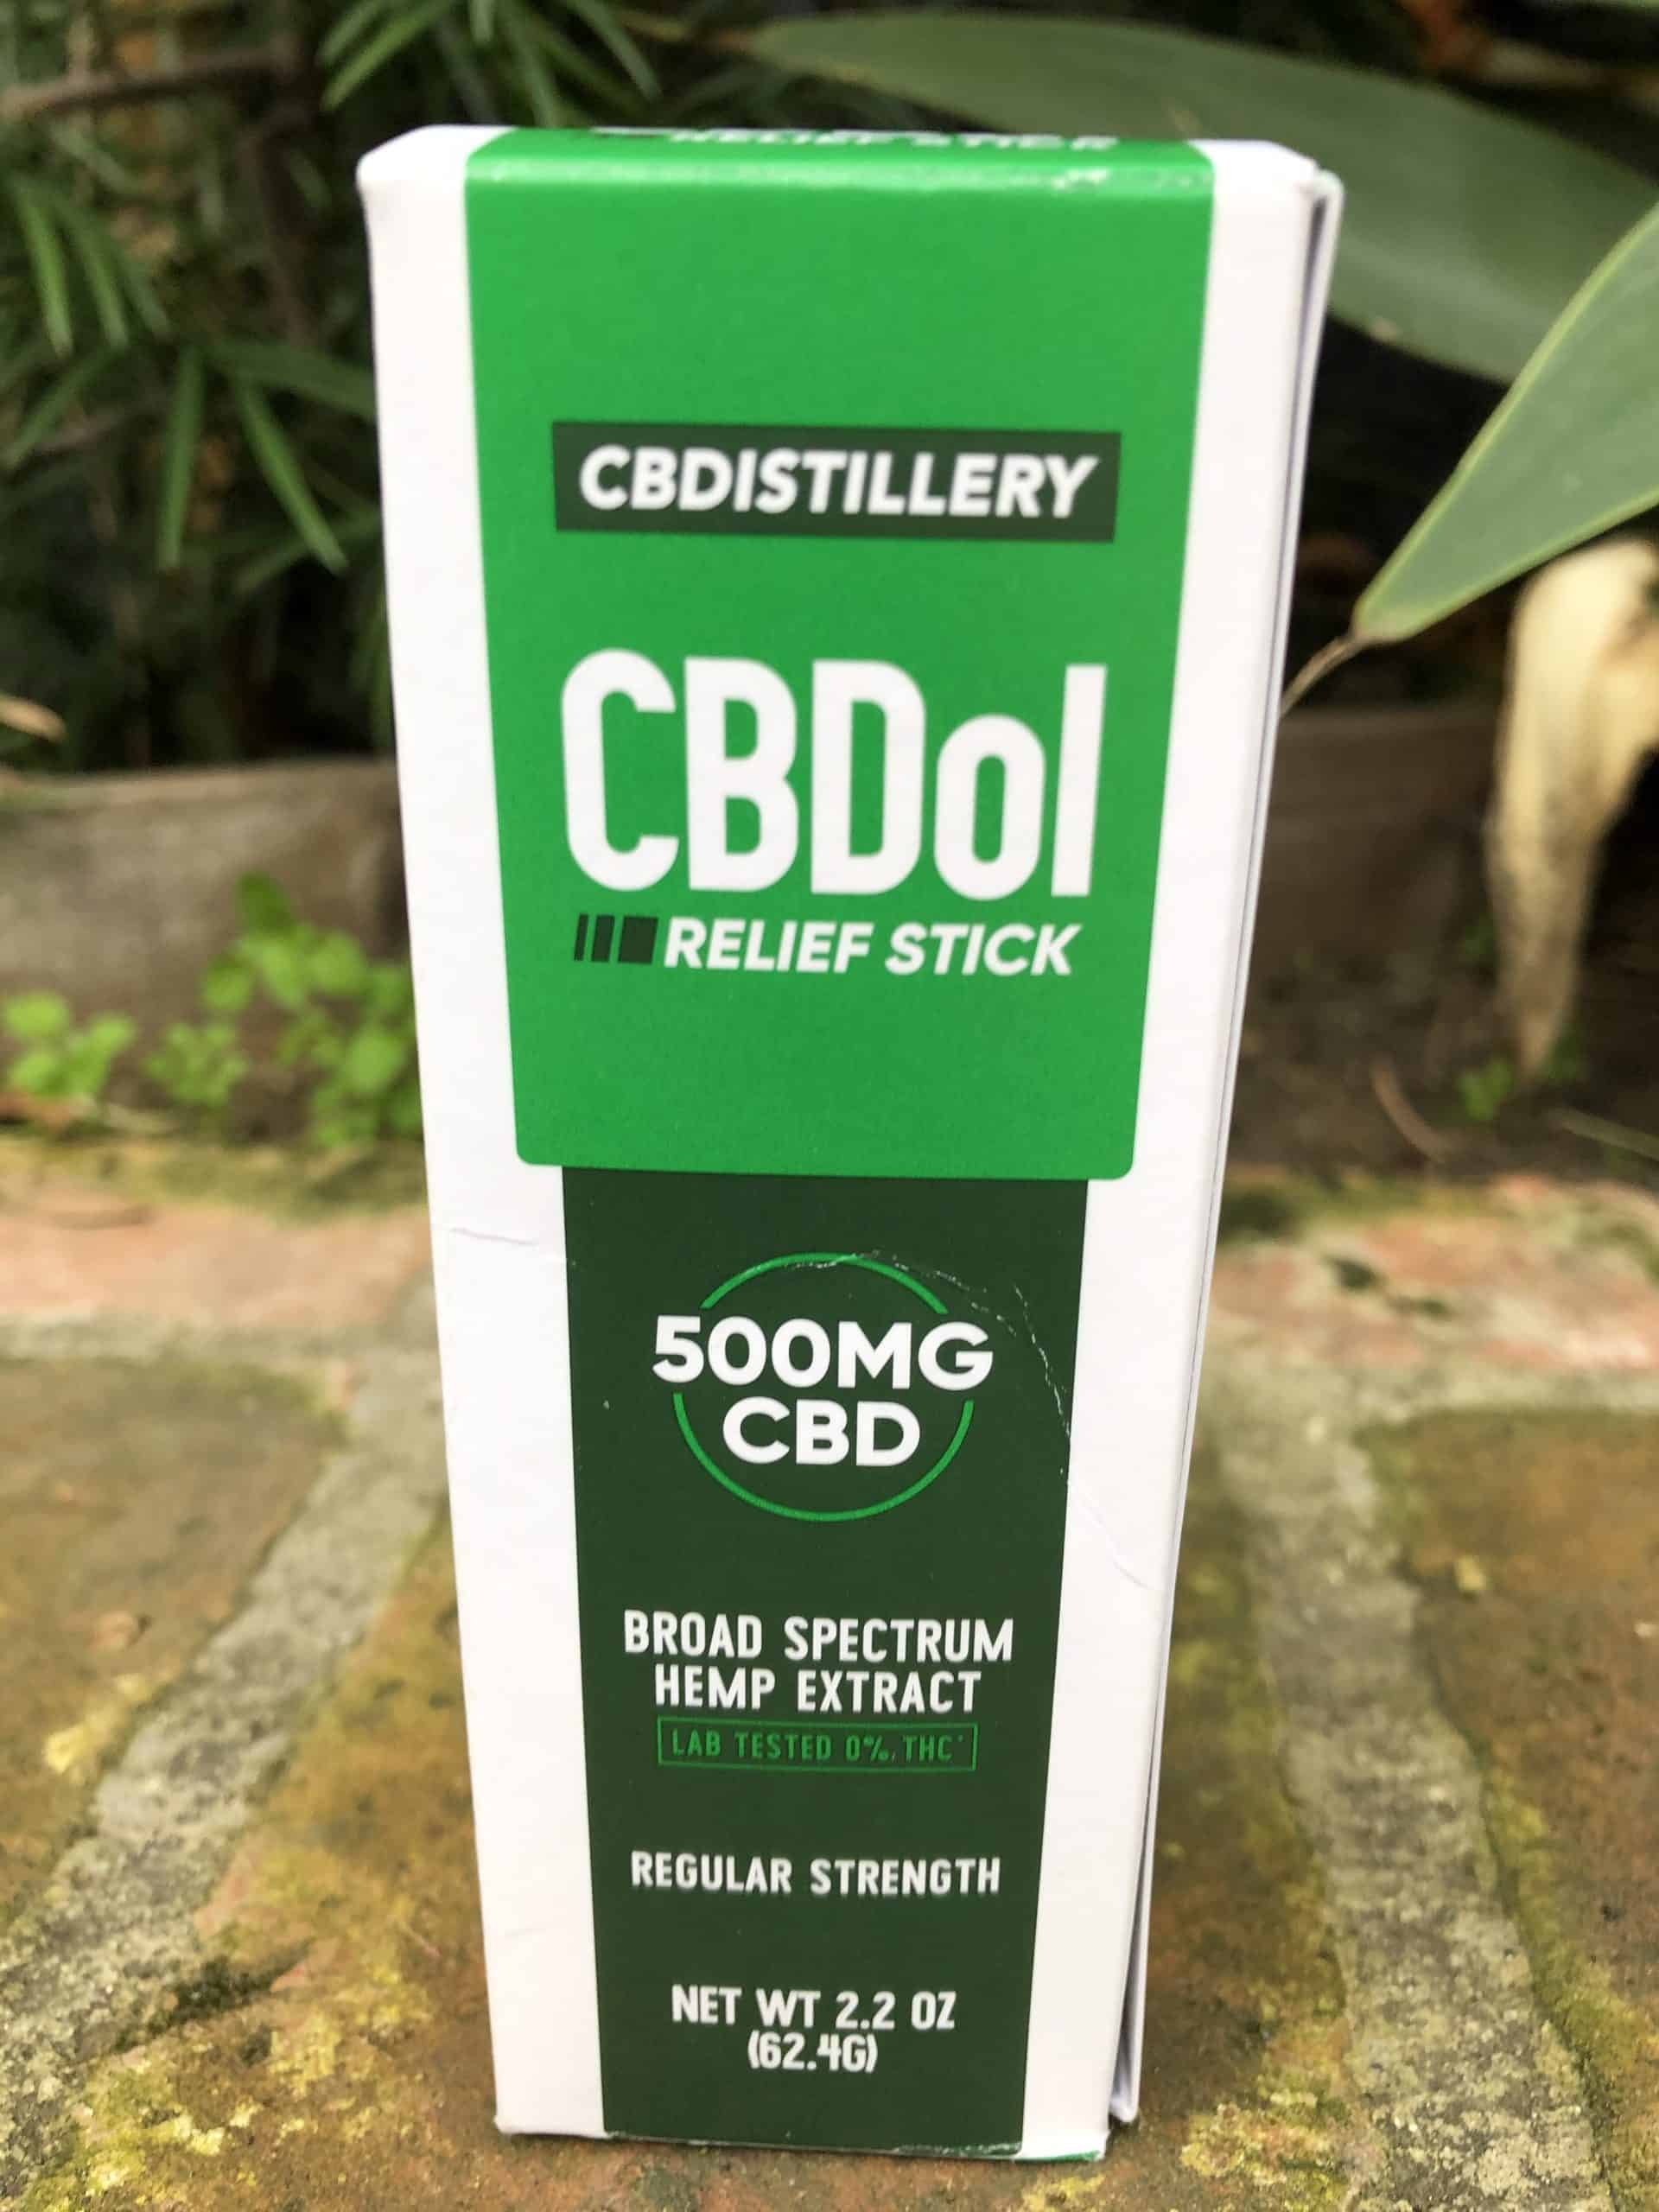 cbdistillery cbdol relief stick save on cannabis review